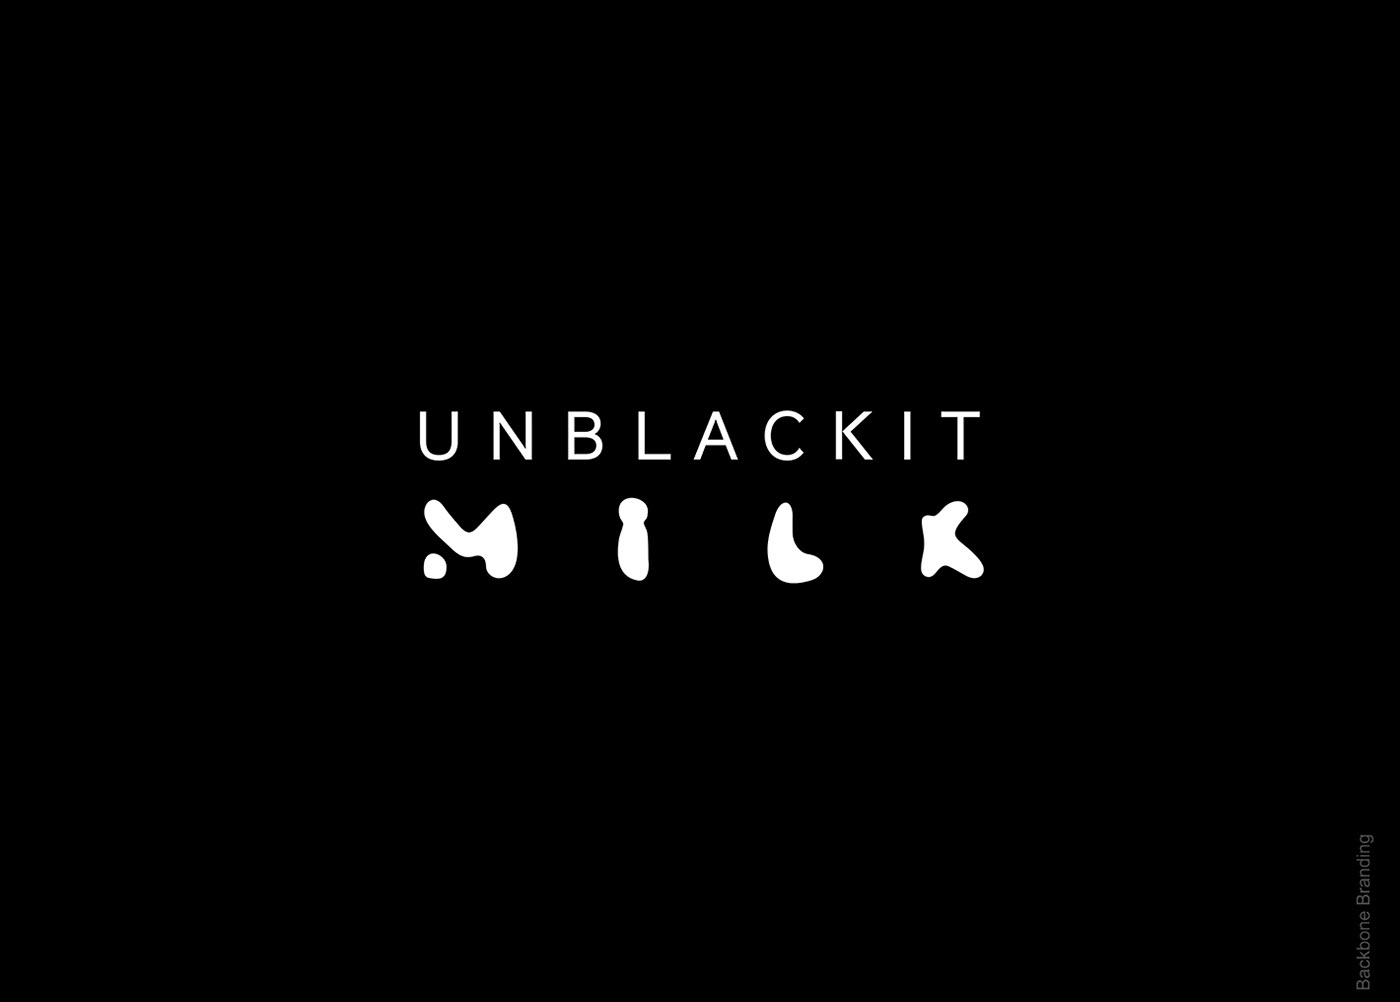 milk Dairy Packaging White black cow Spots animal print